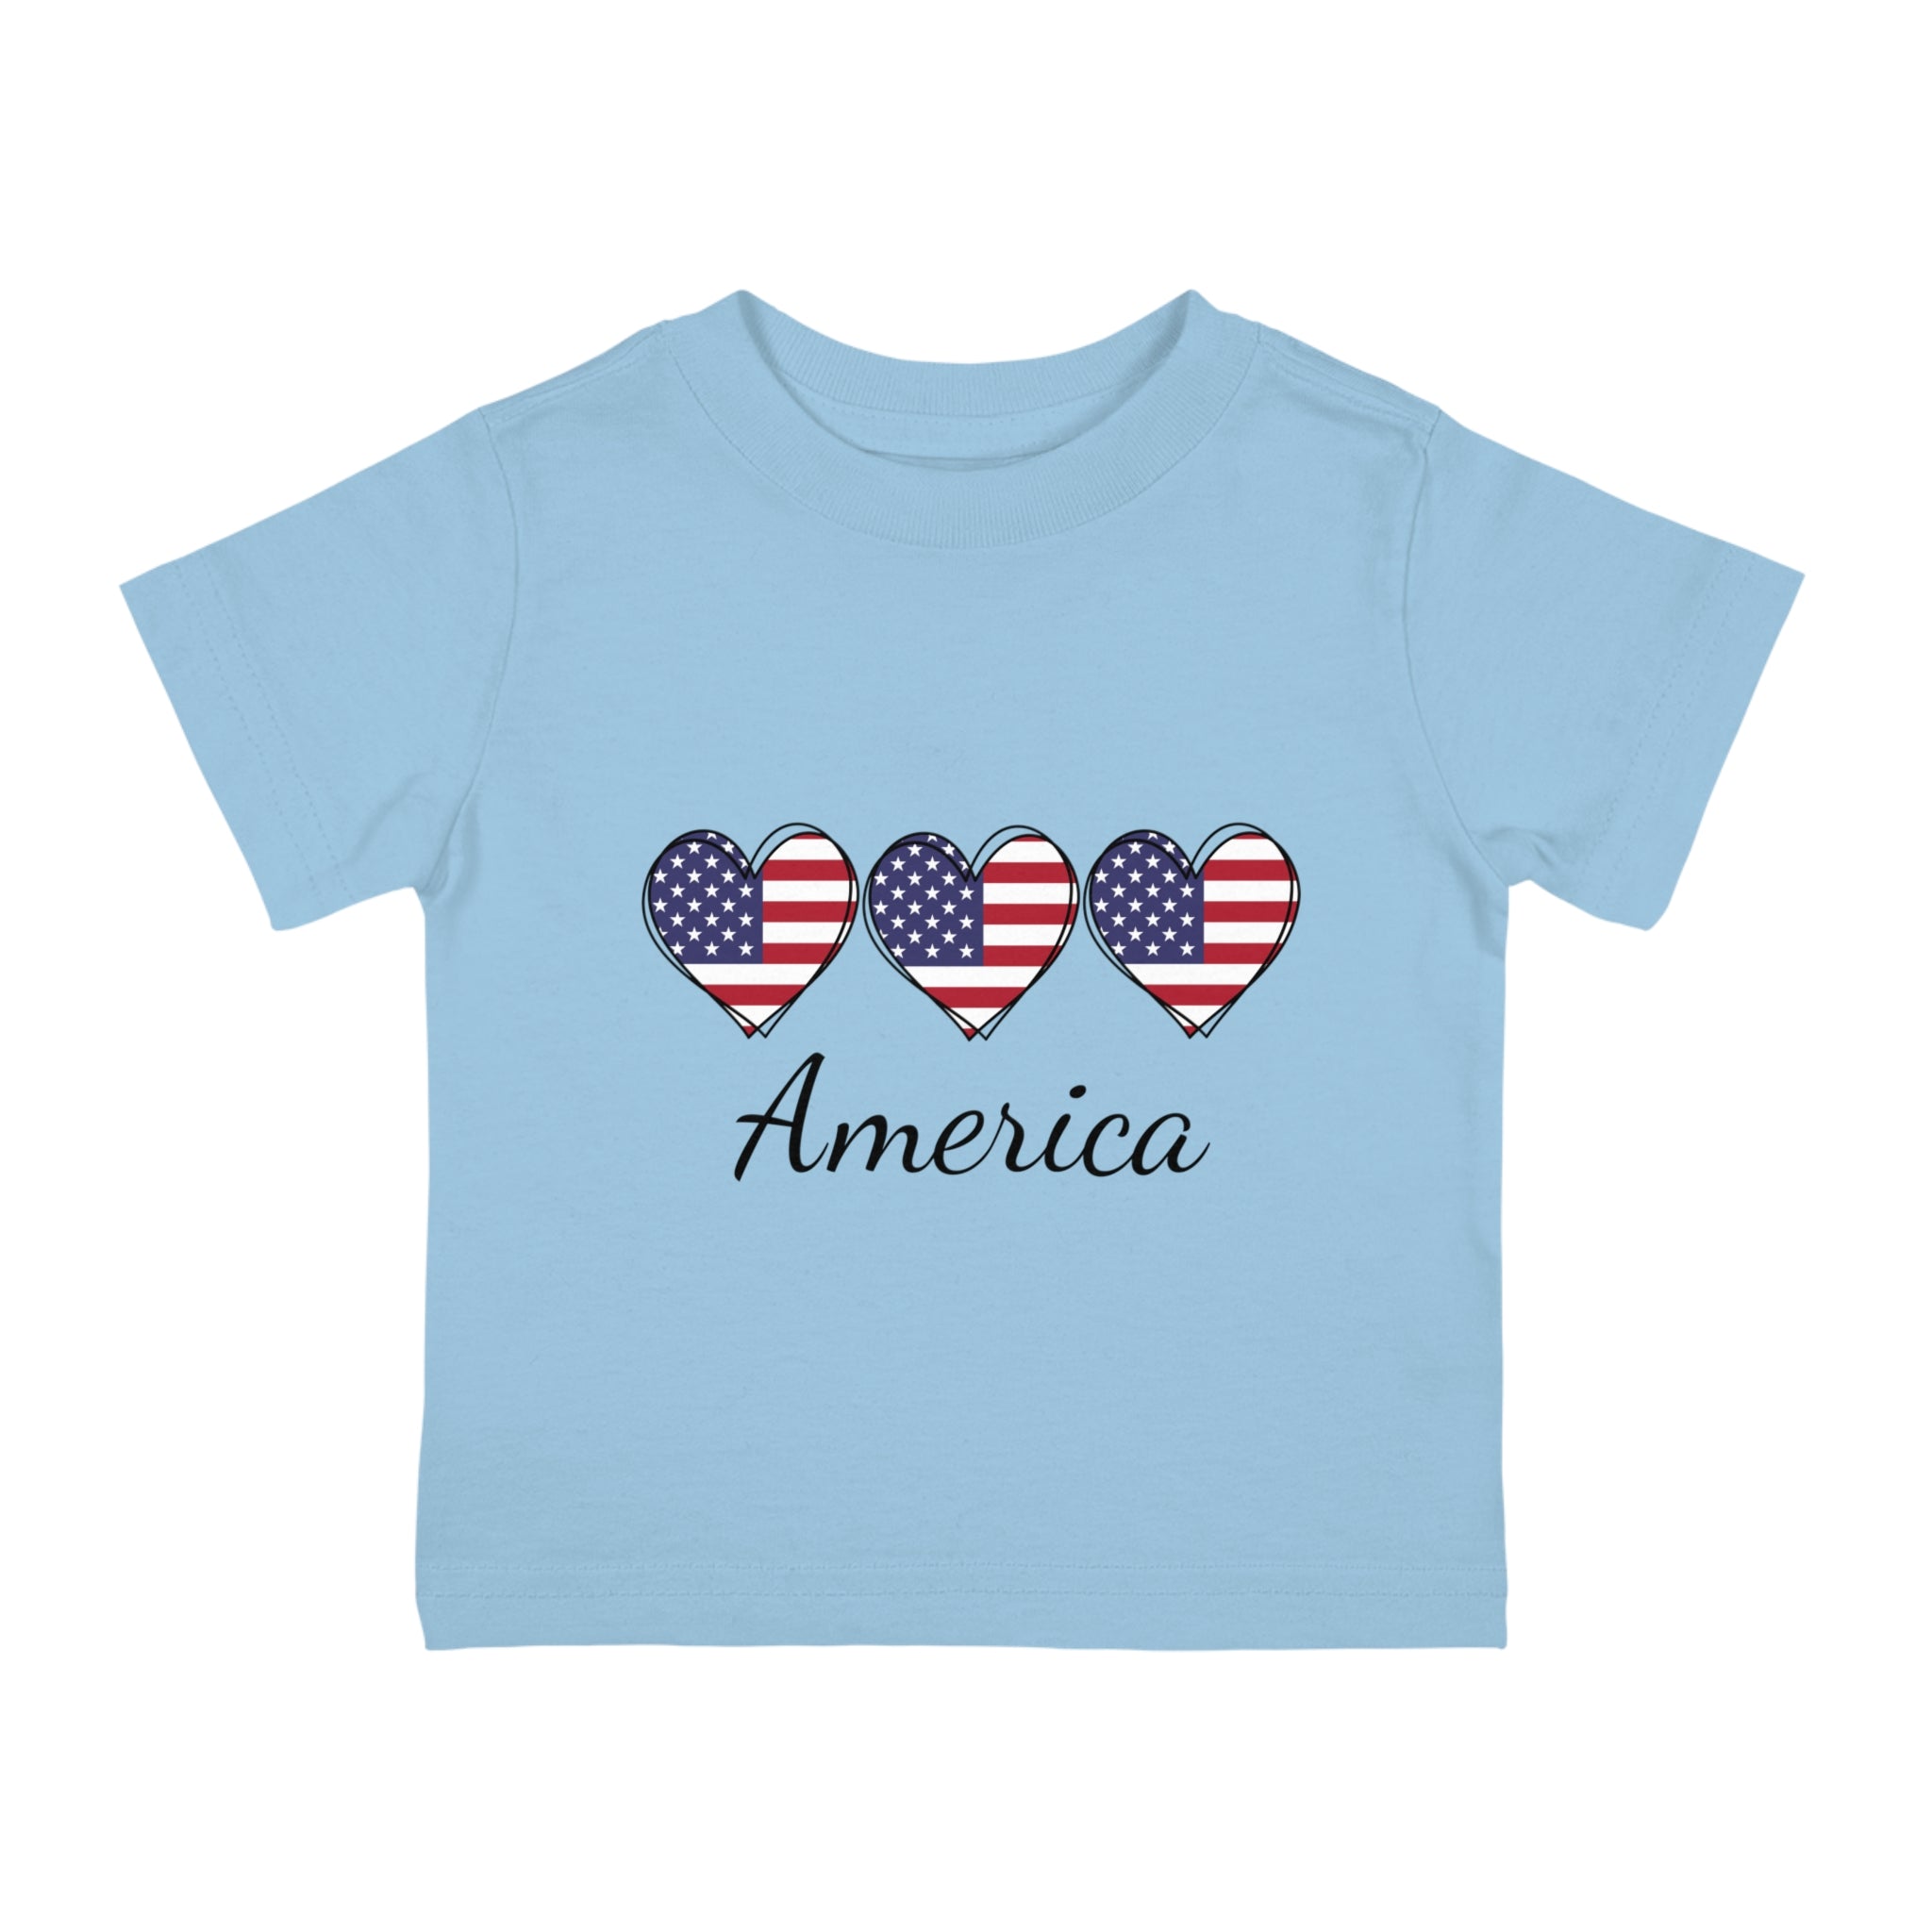 America 3 Hearts Infant Shirt, Baby Tee, Infant Tee